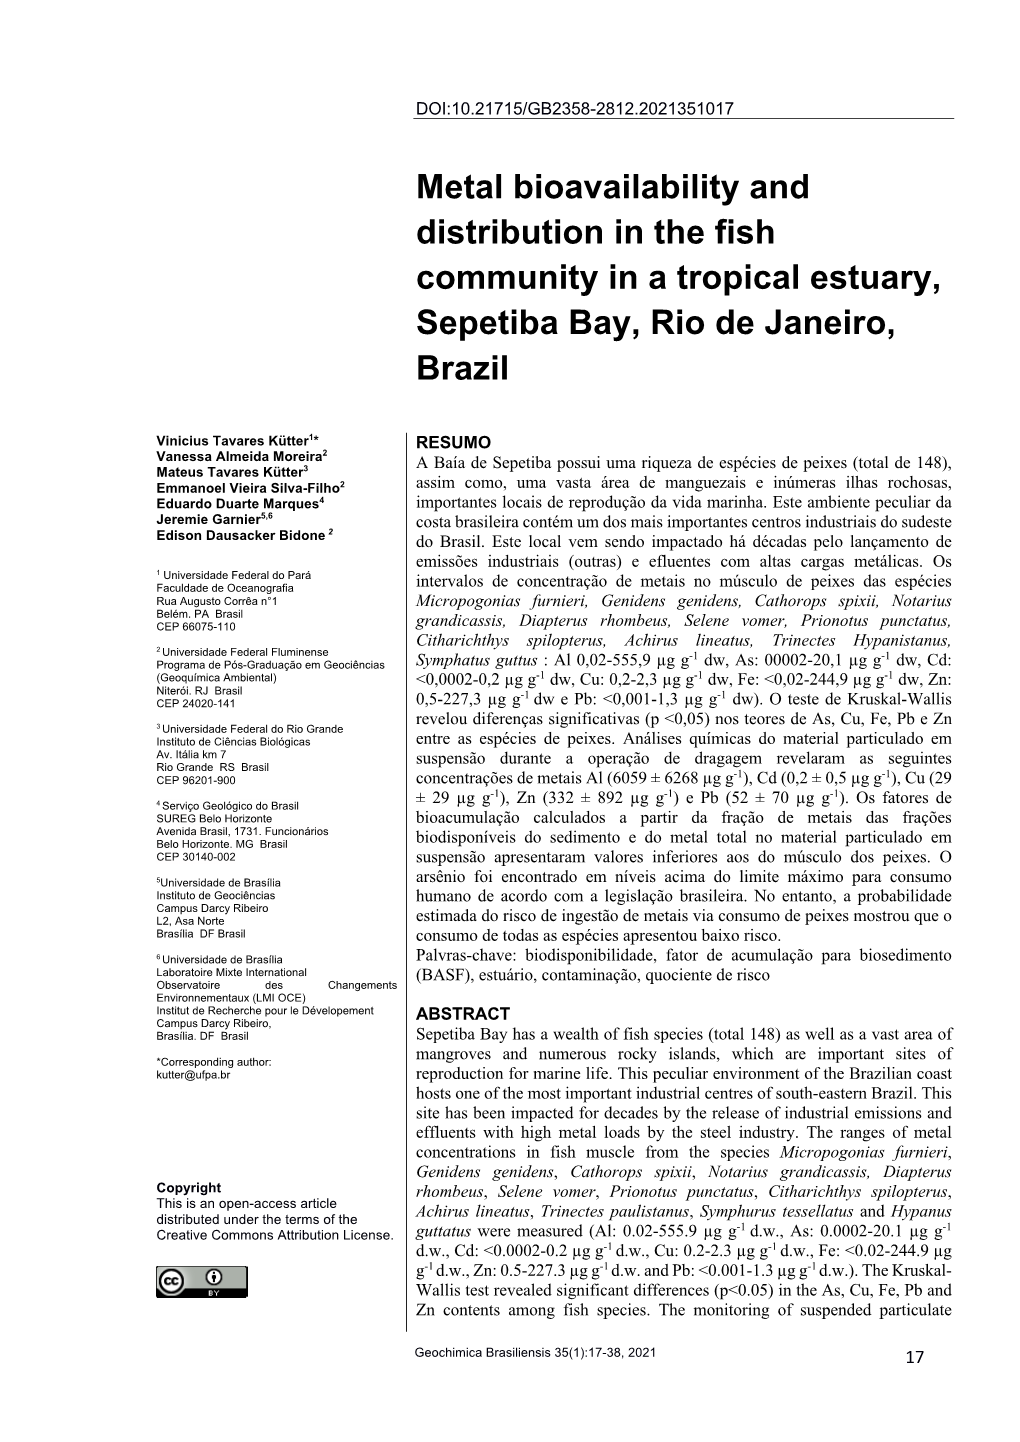 Metal Bioavailability and Distribution in the Fish Community in a Tropical Estuary, Sepetiba Bay, Rio De Janeiro, Brazil